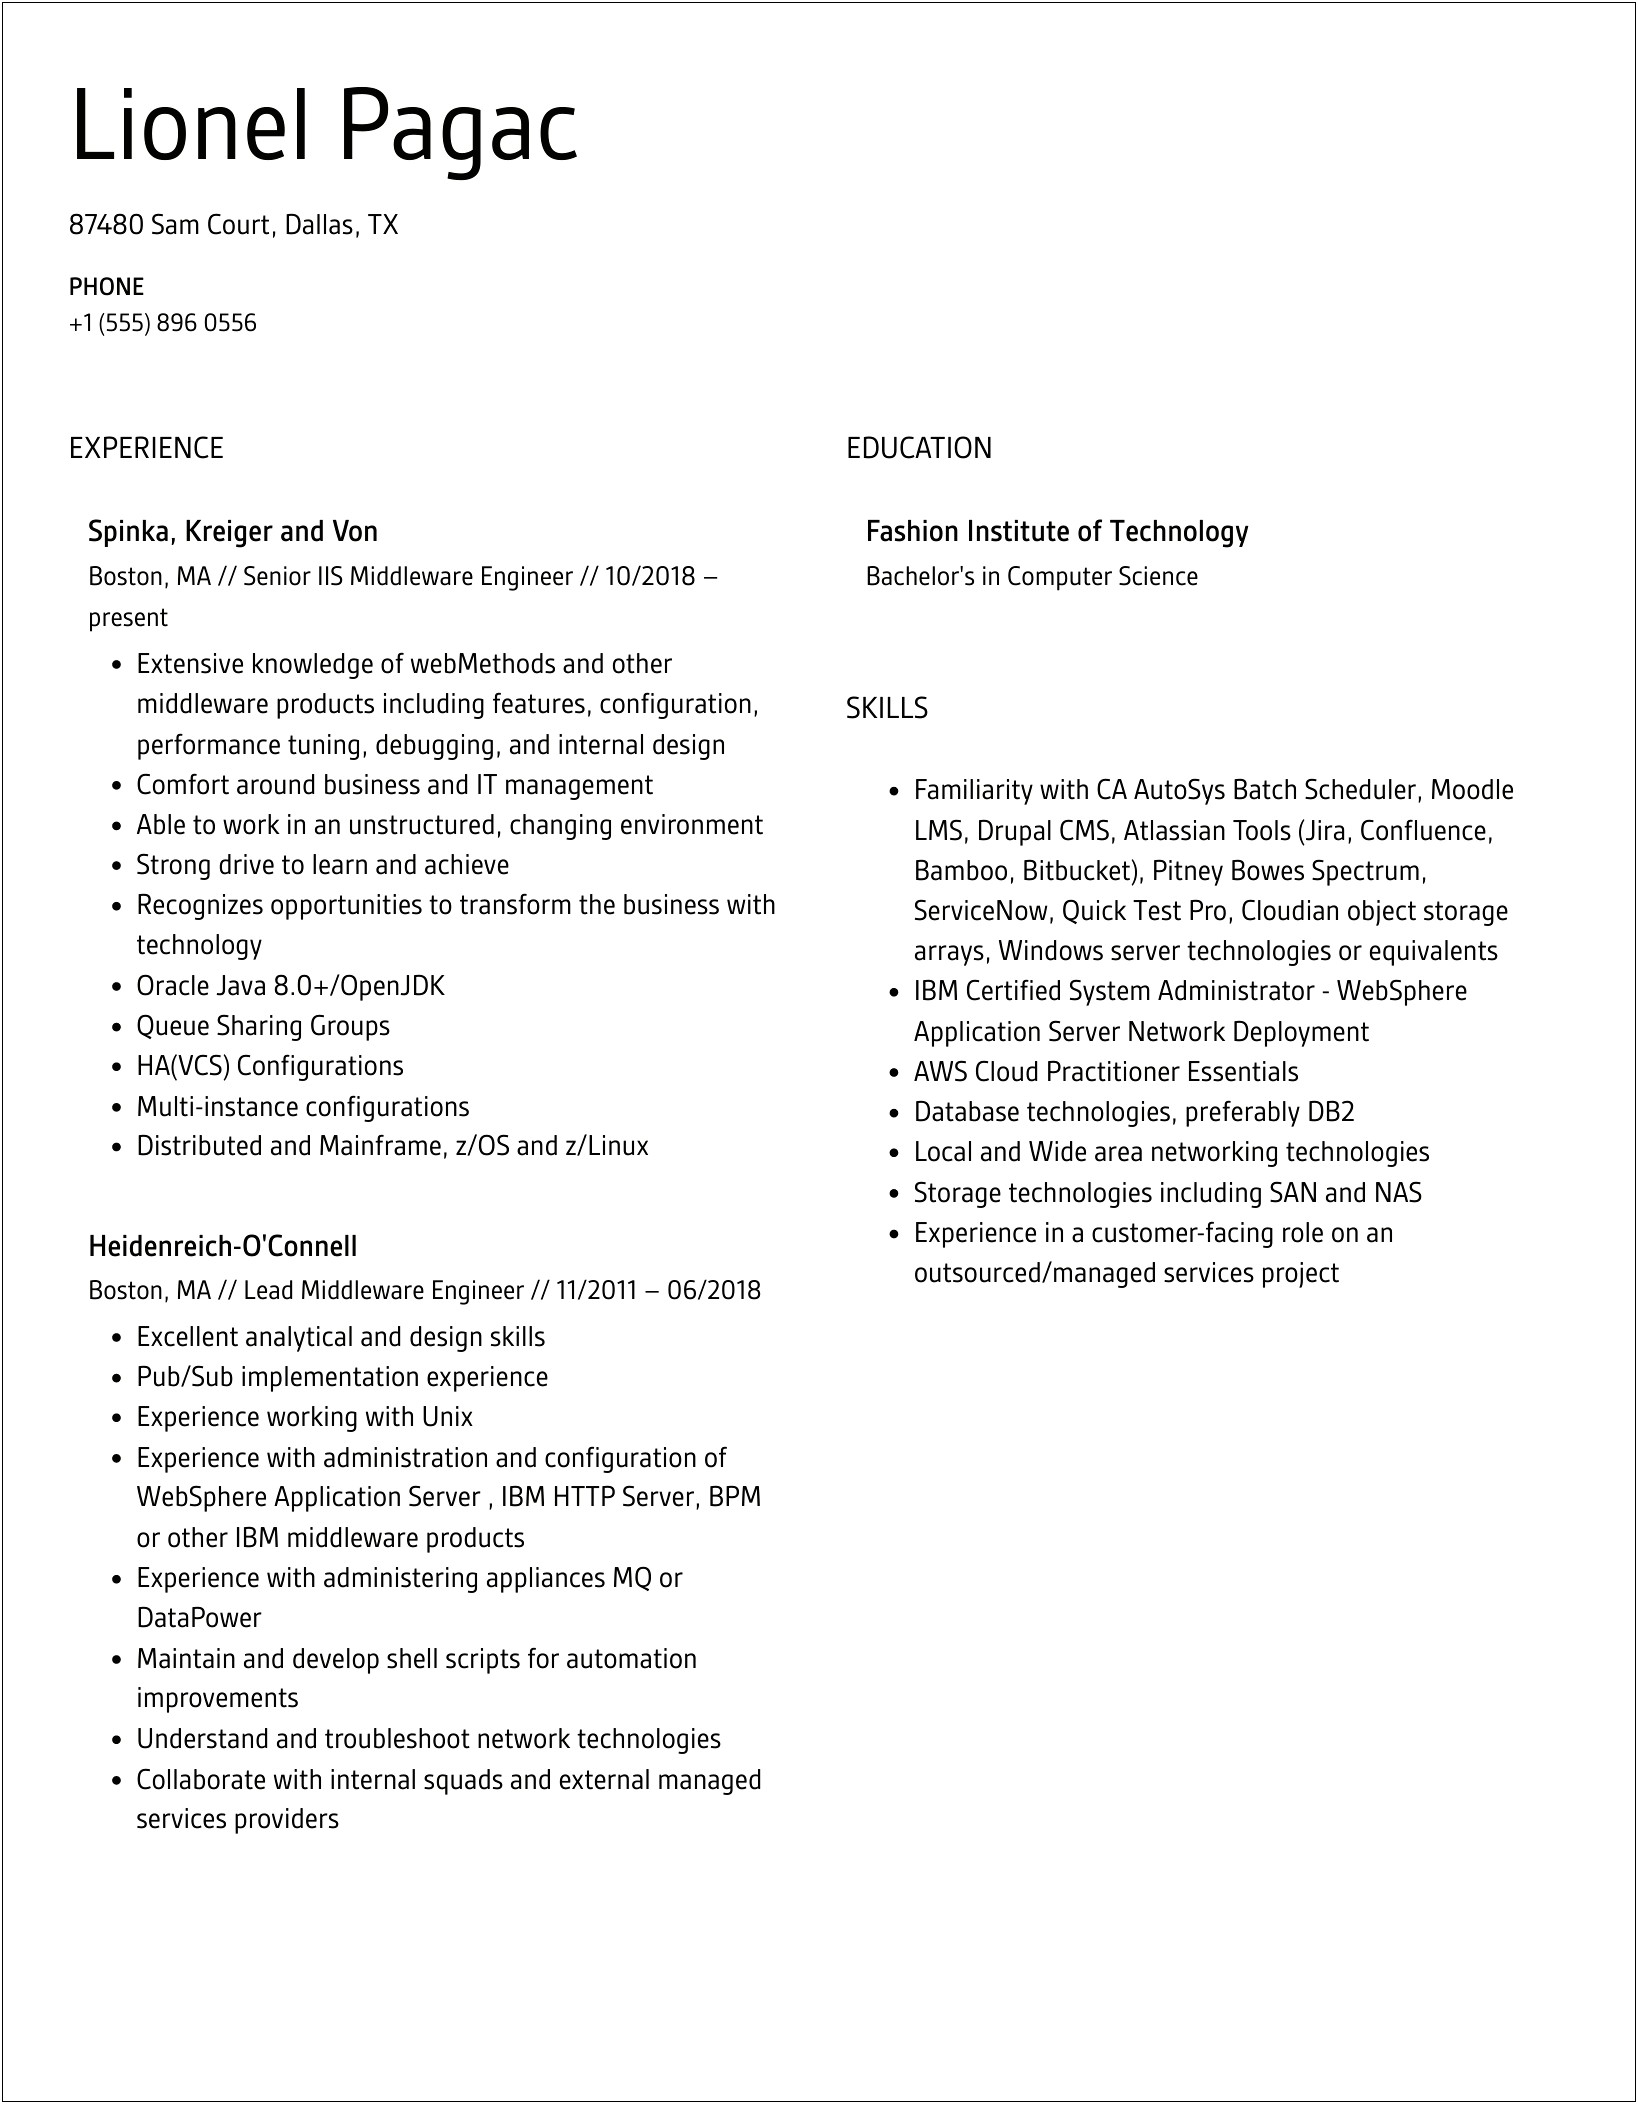 Websphere Application Server 3 Years Experience Resume